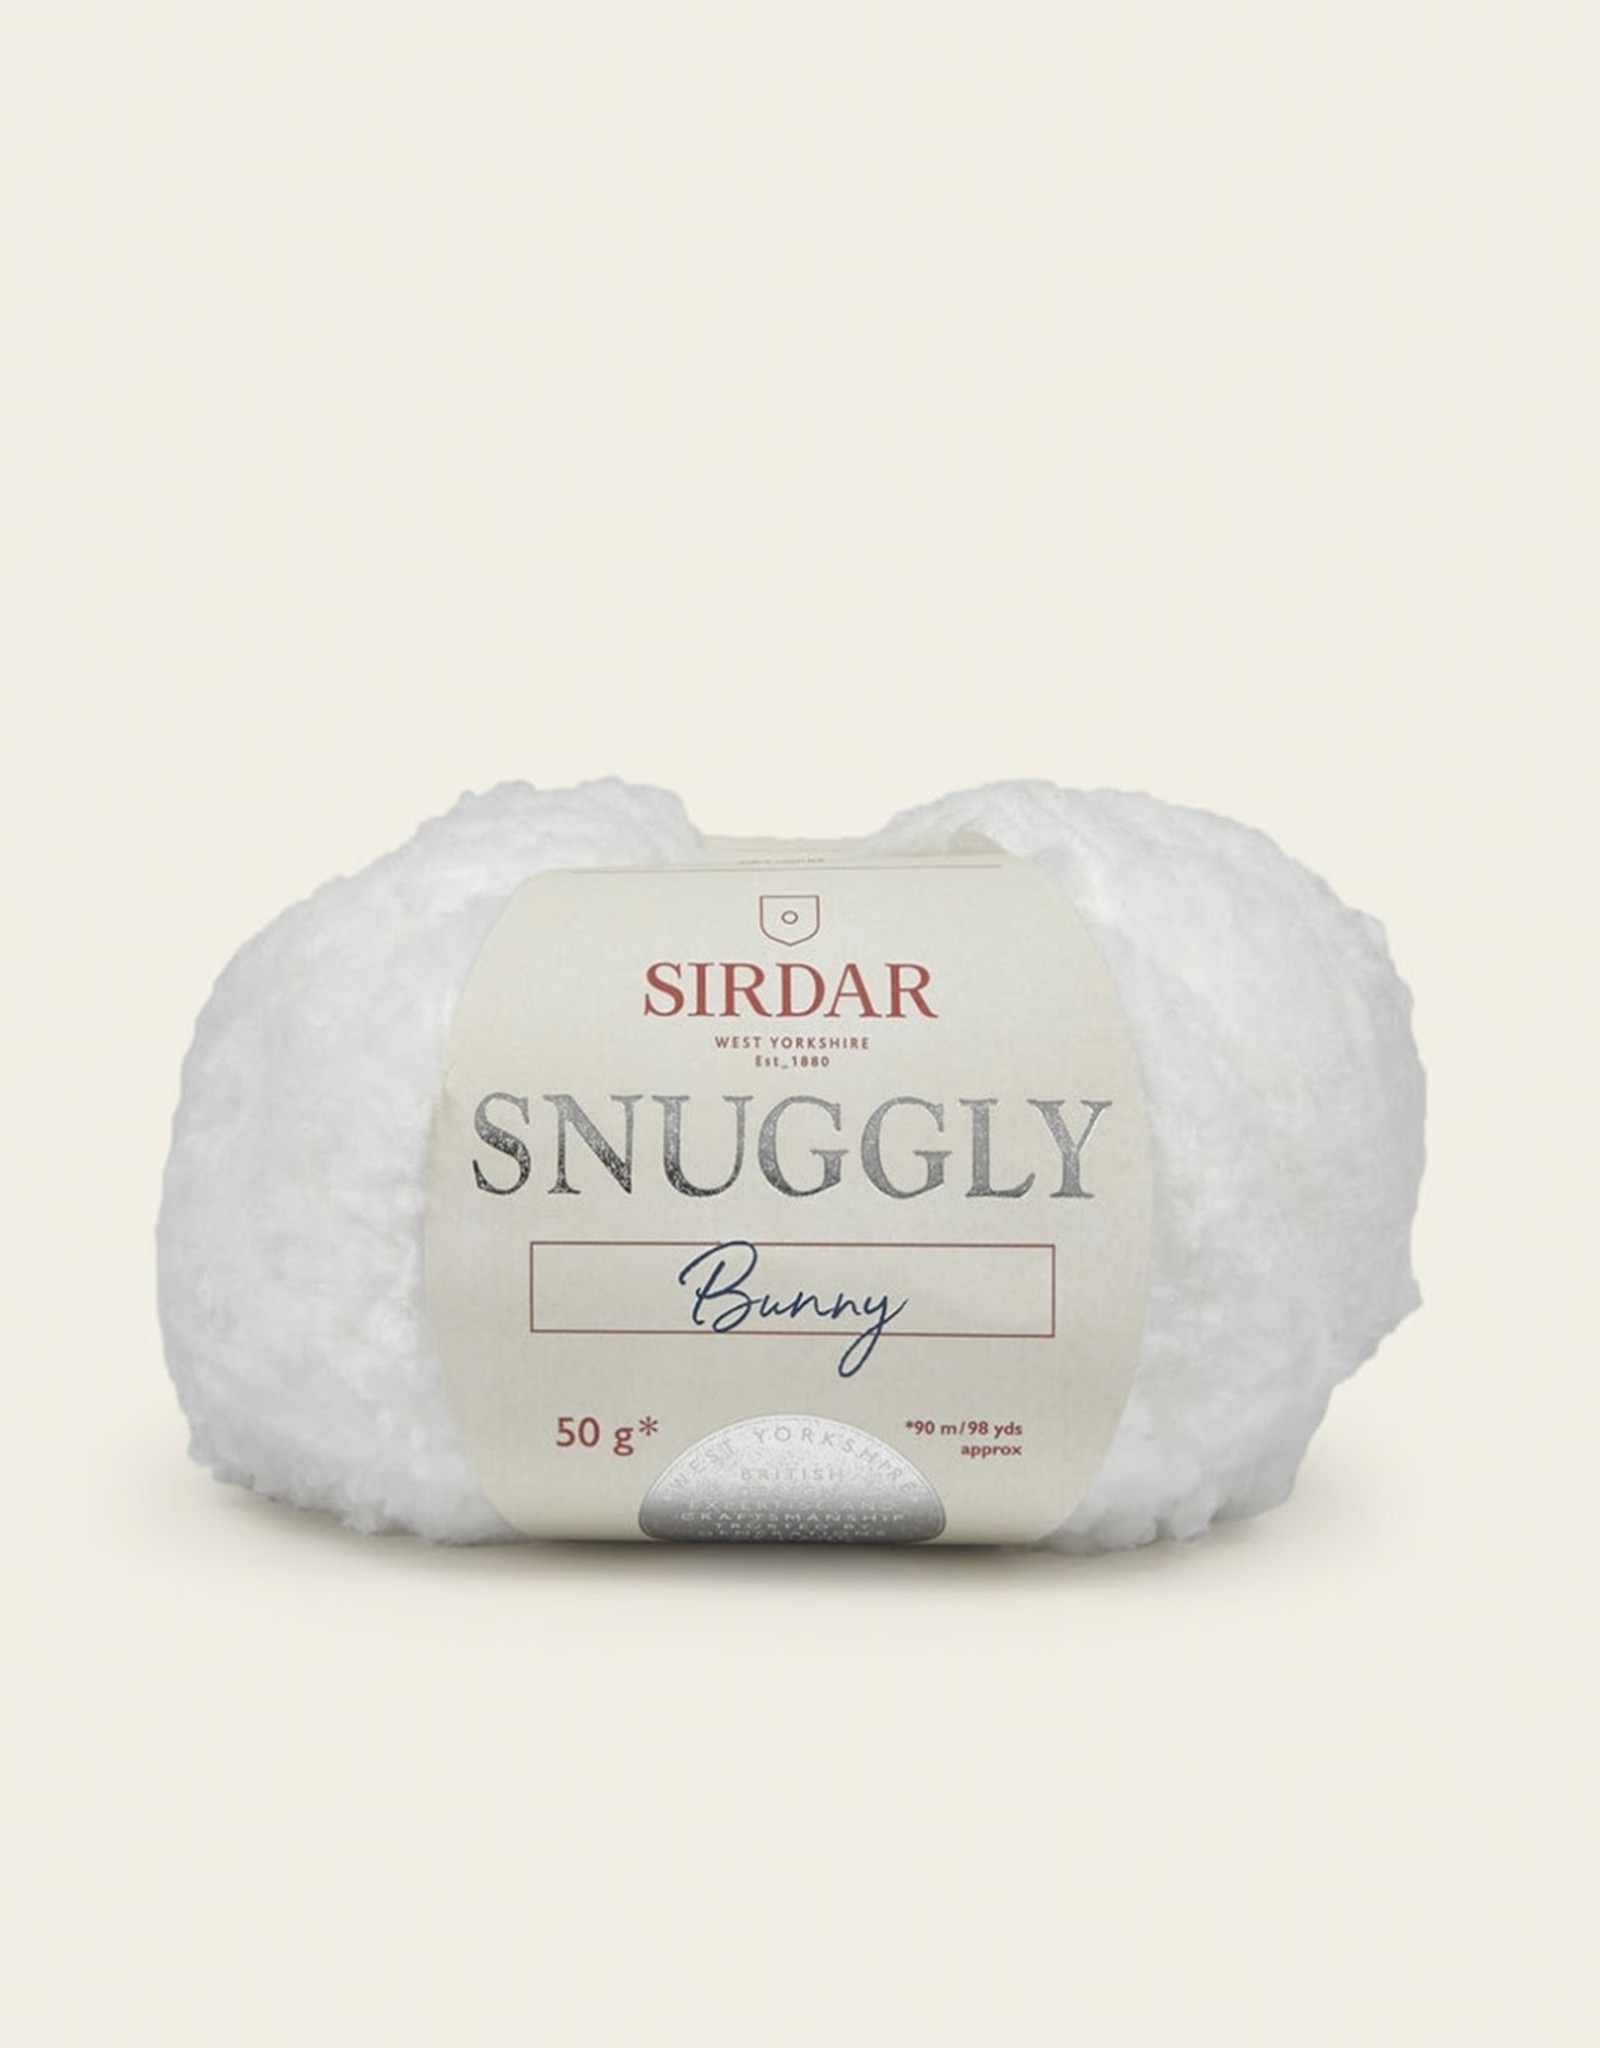 Sirdar Snuggly Bunny 310 lamb